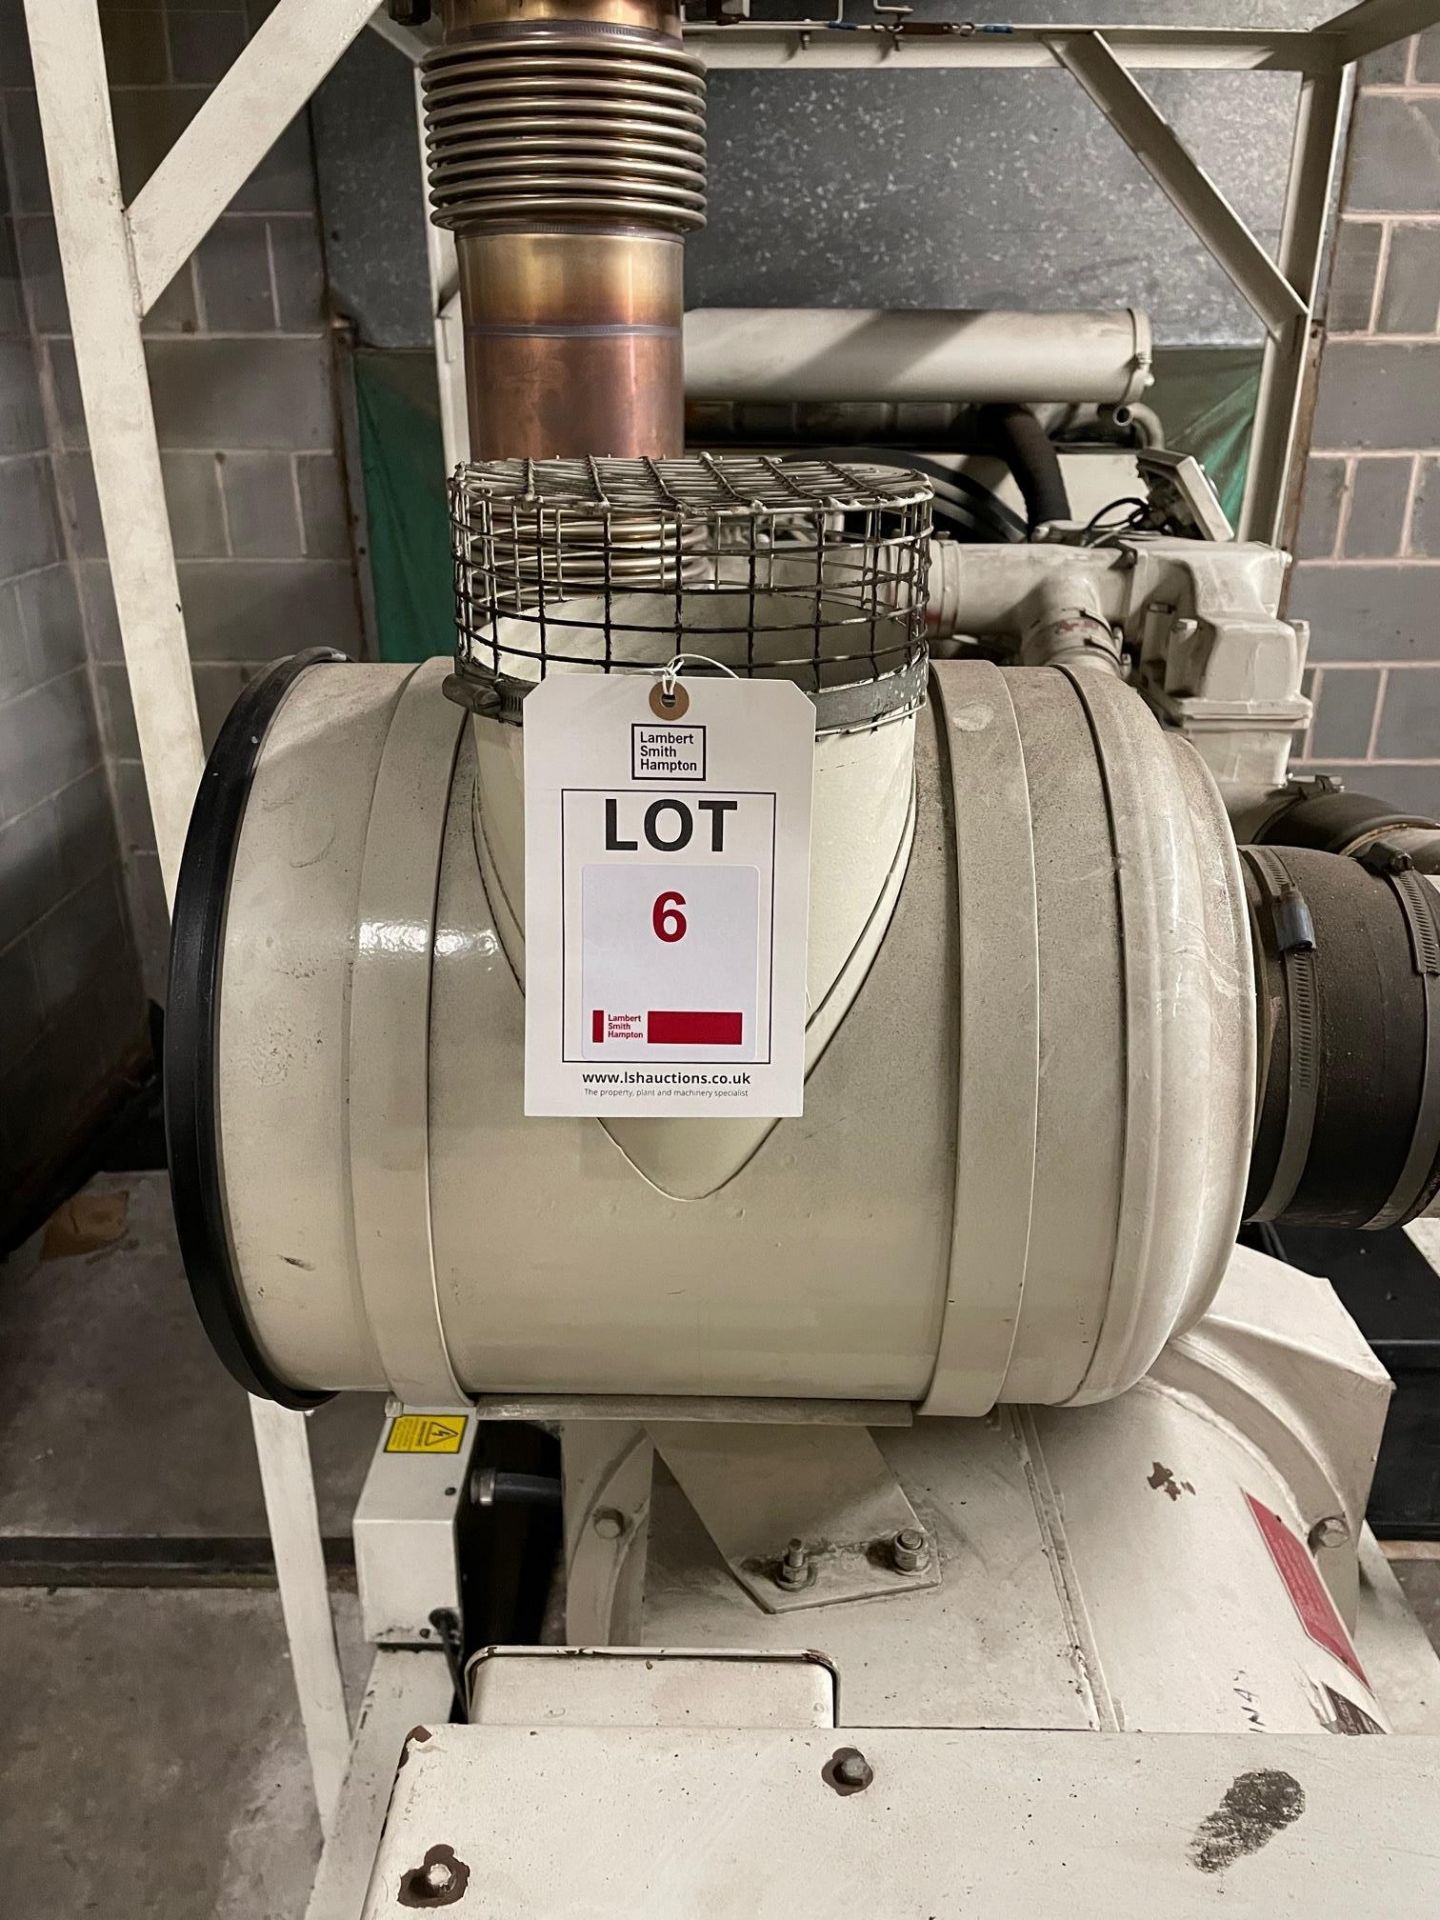 Dorman Dale - 456 kw generator, Plant No. A21T, engine type V12-450G, engine number CV450-B15-138. - Image 2 of 7